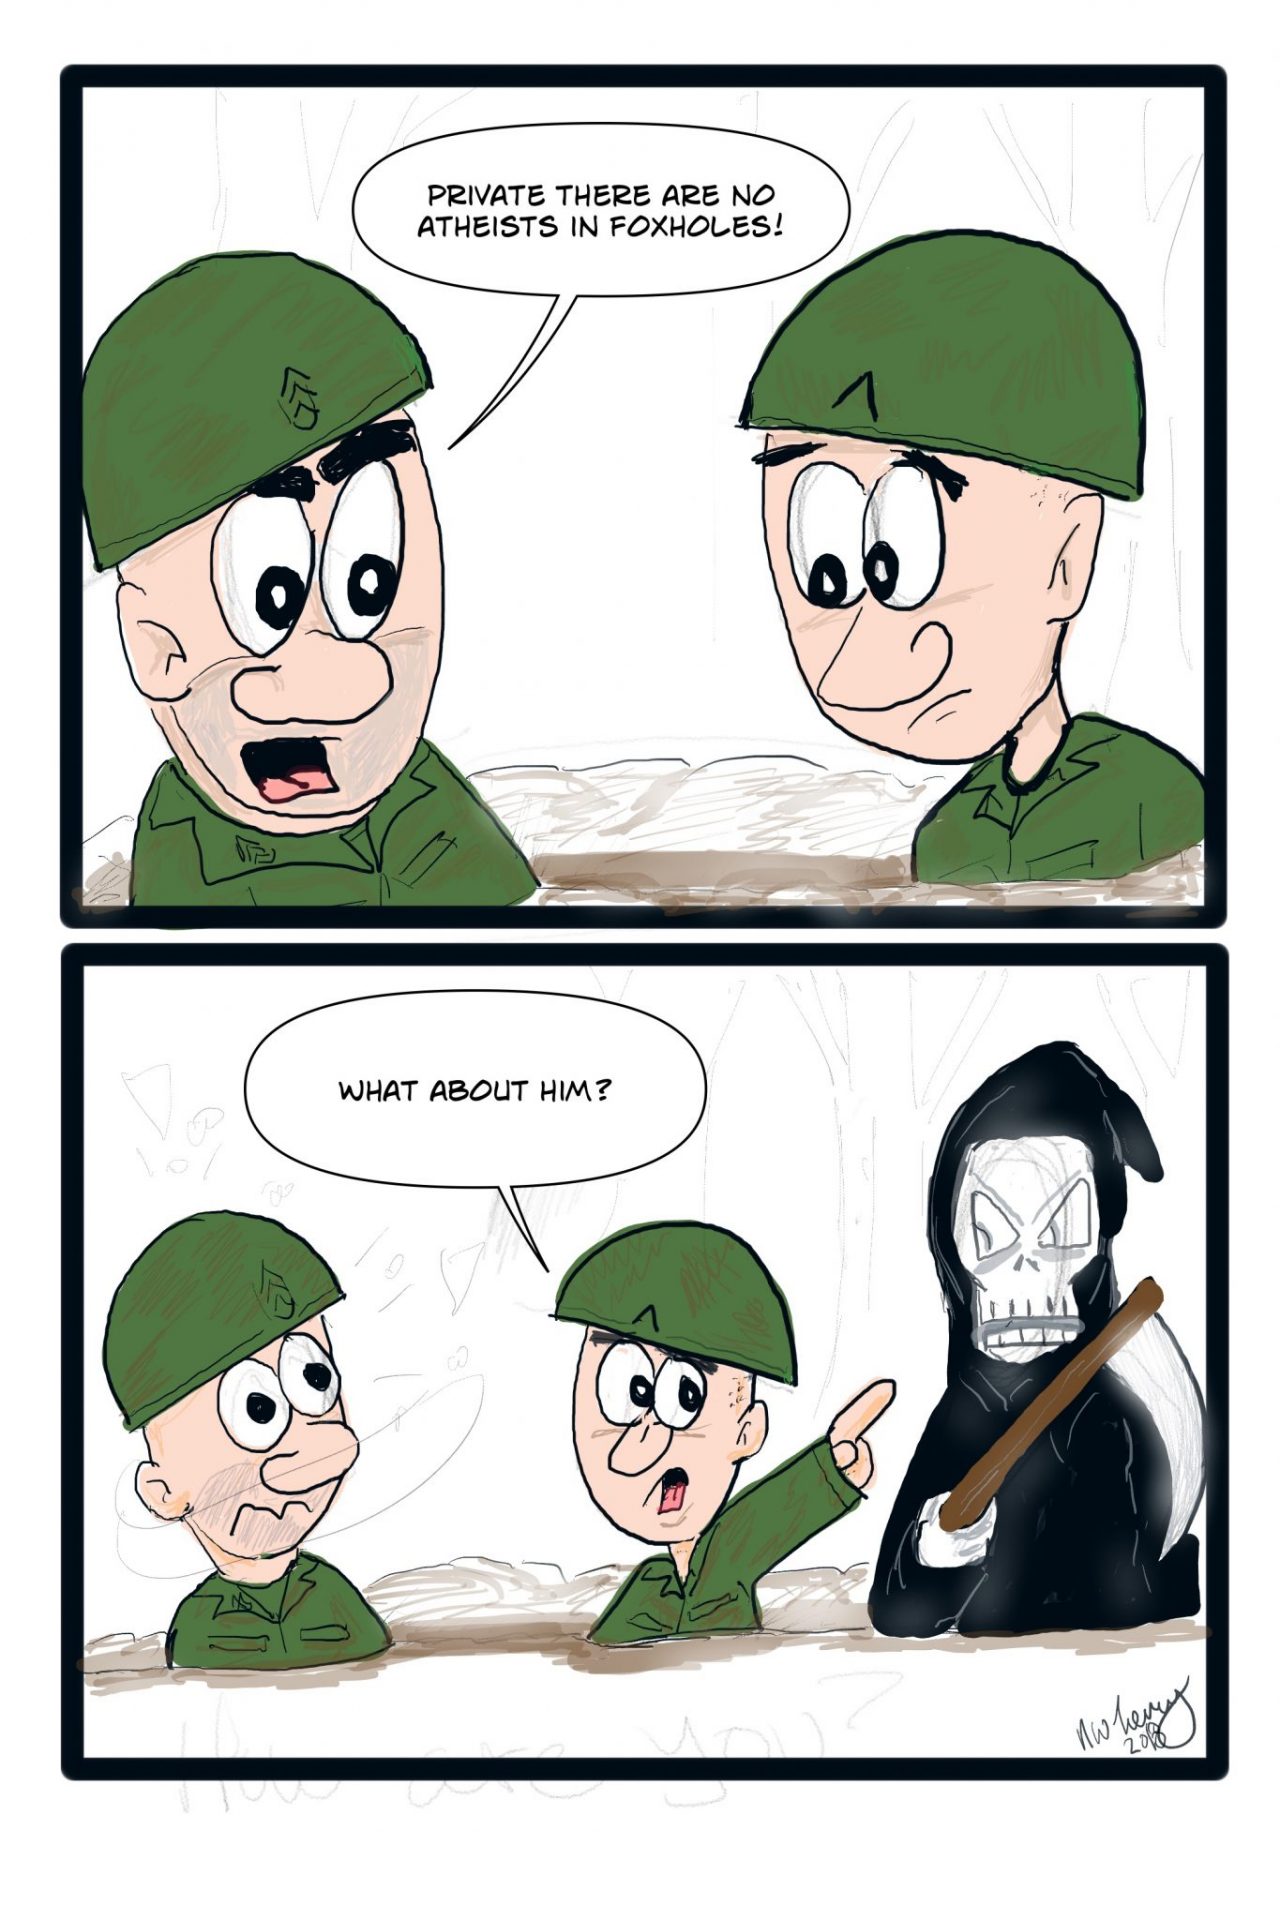 atheist-military-foxhole-army-humor